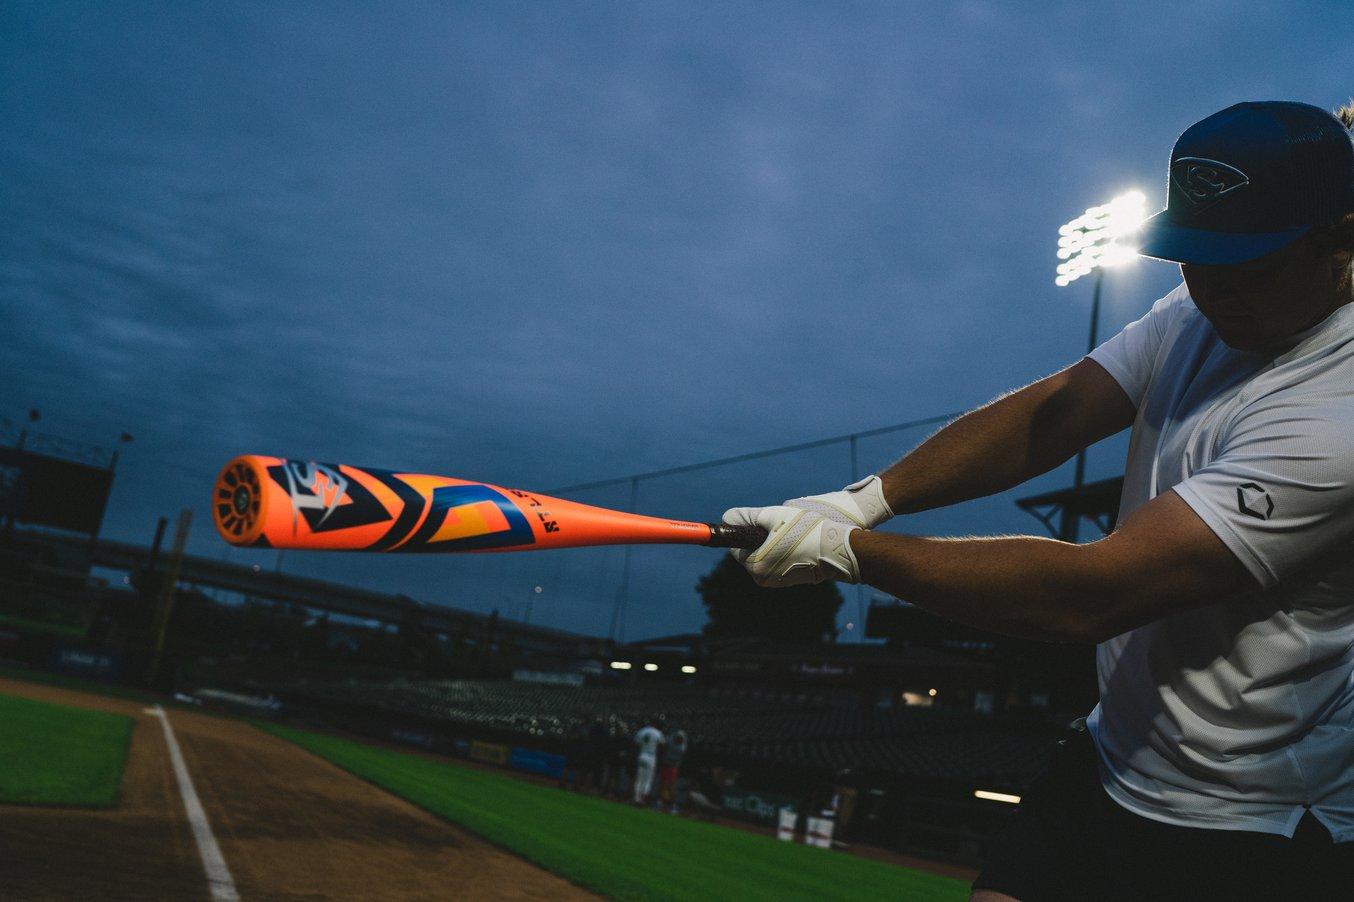 a baseball player swings an orange baseball bat on a baseball field